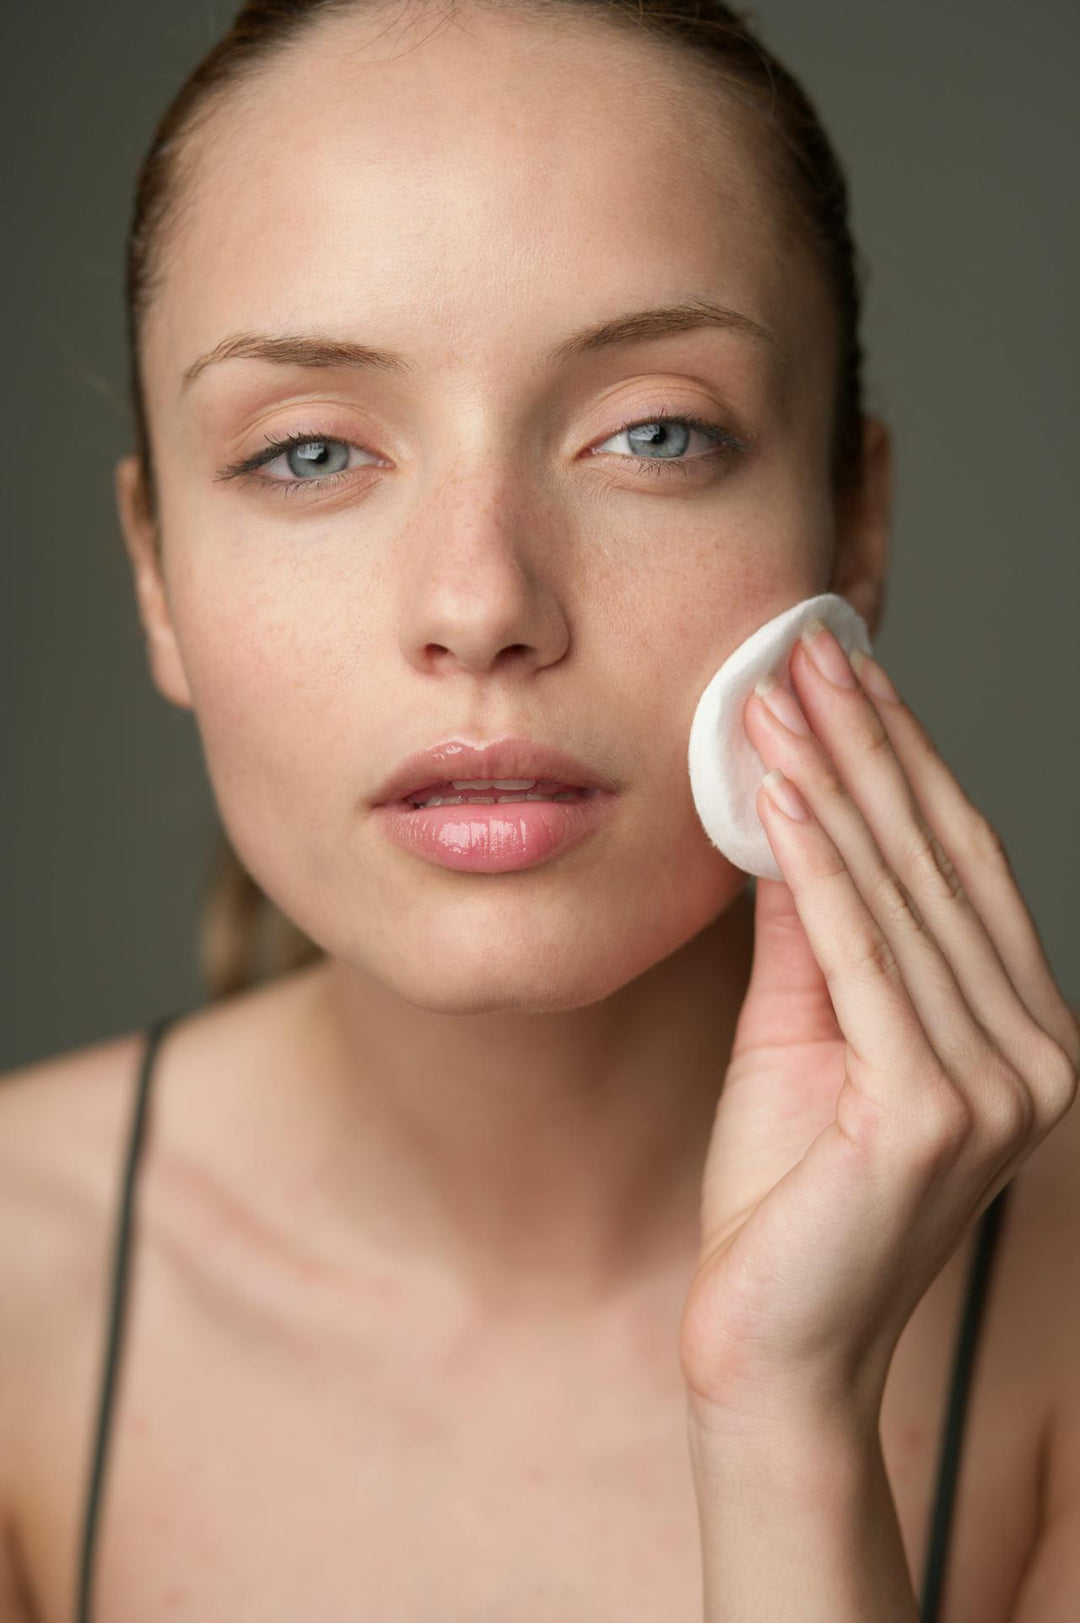 Retinol Creams Role in Skin Elasticity